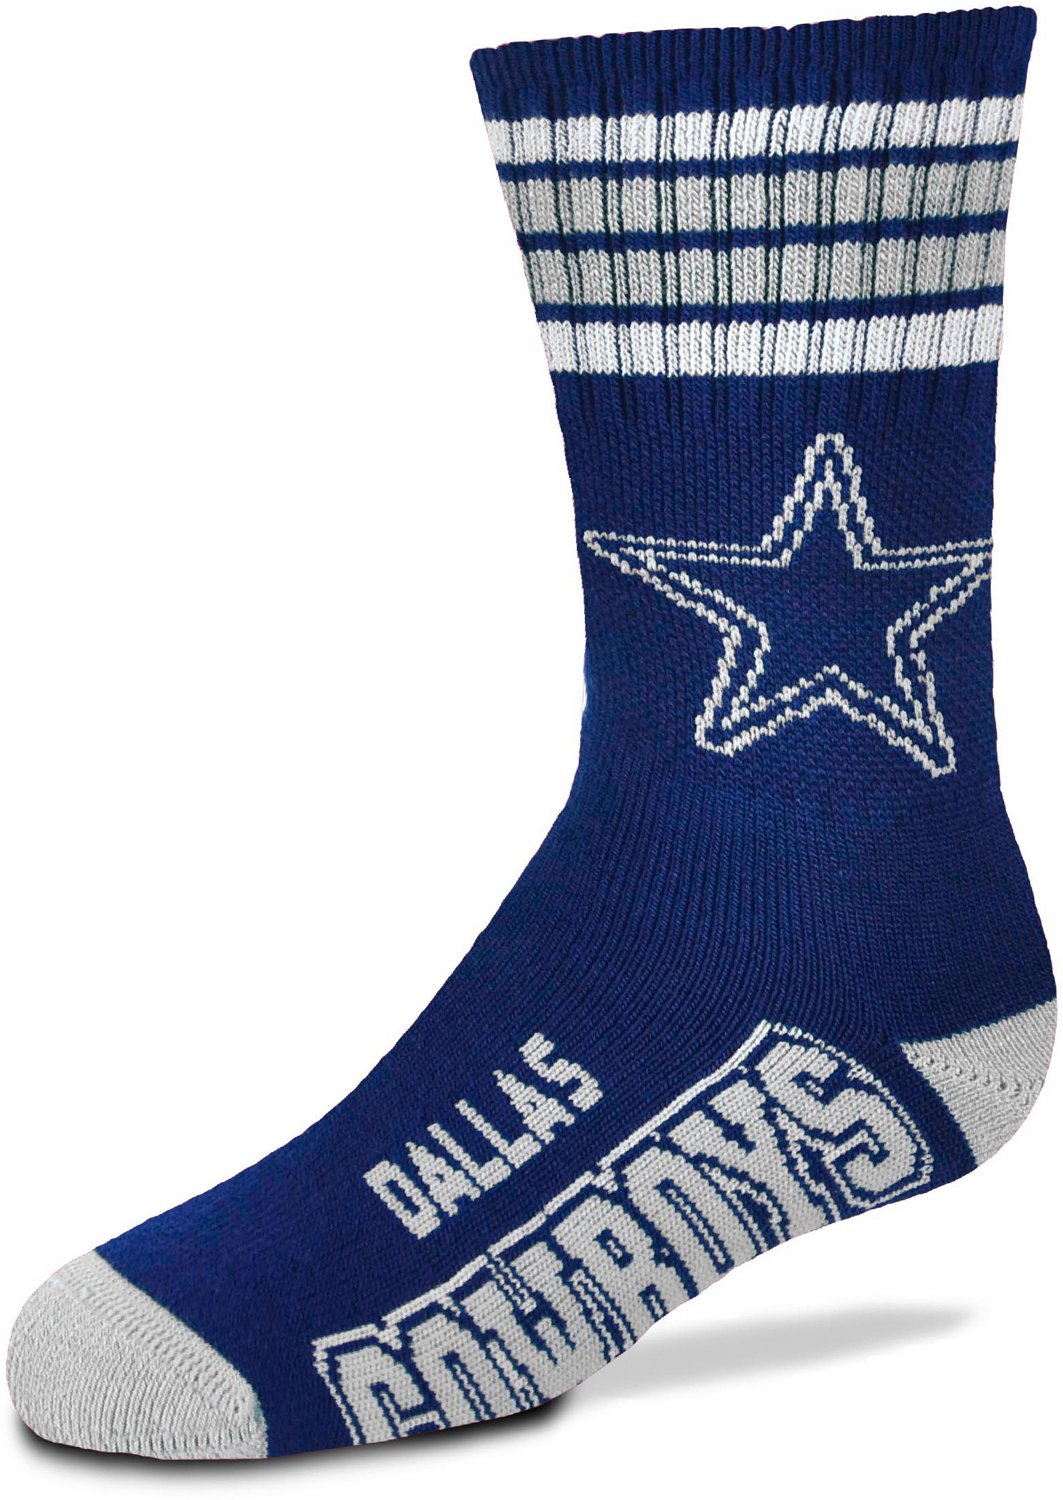 Dallas Cowboys clothing